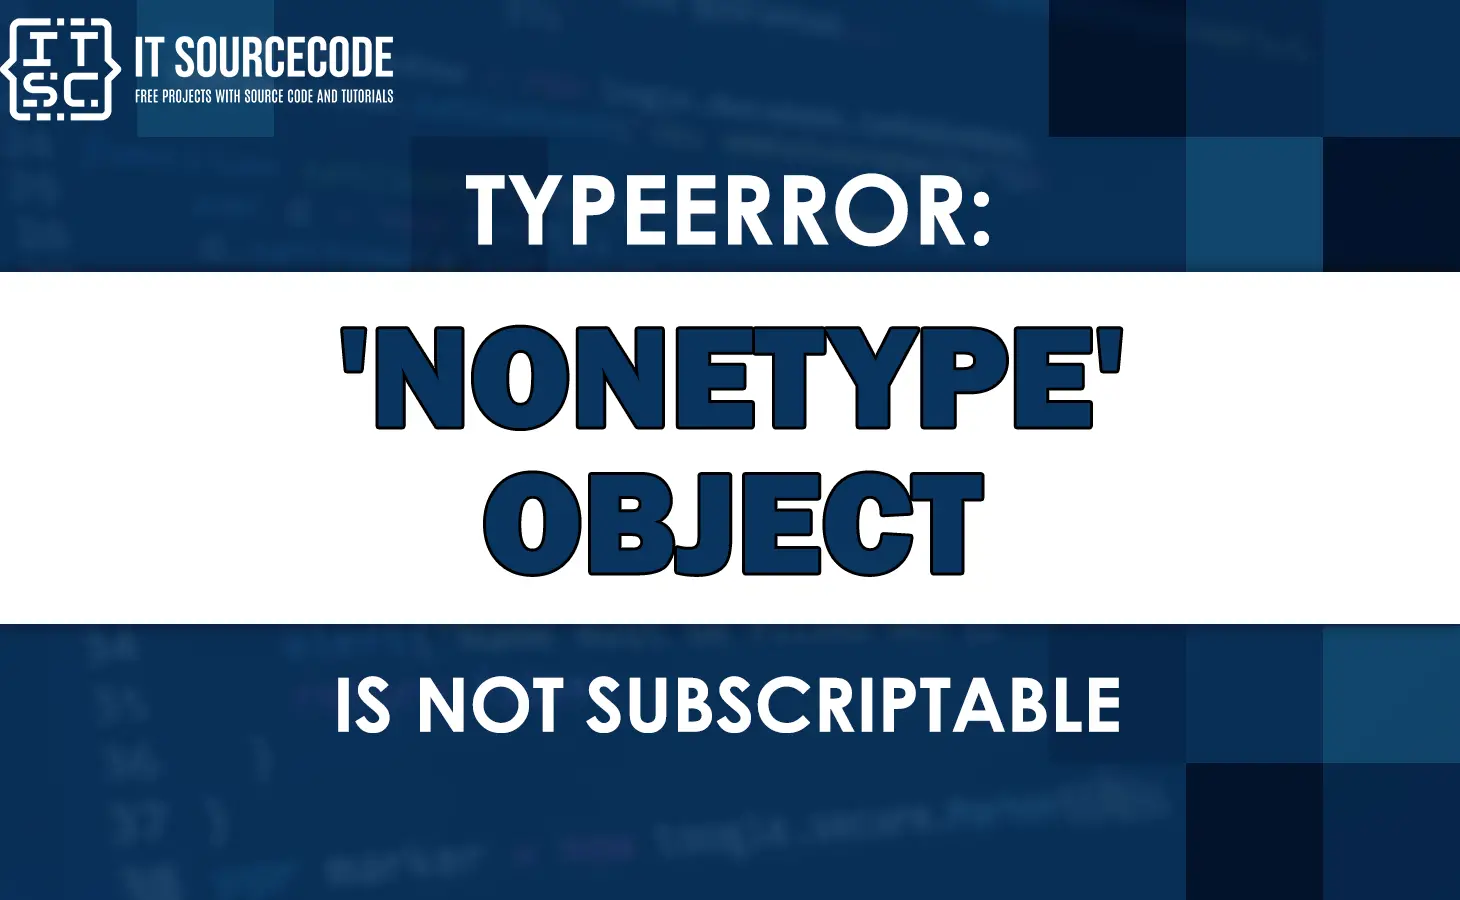 Typeerror: nonetype object is not subscriptable